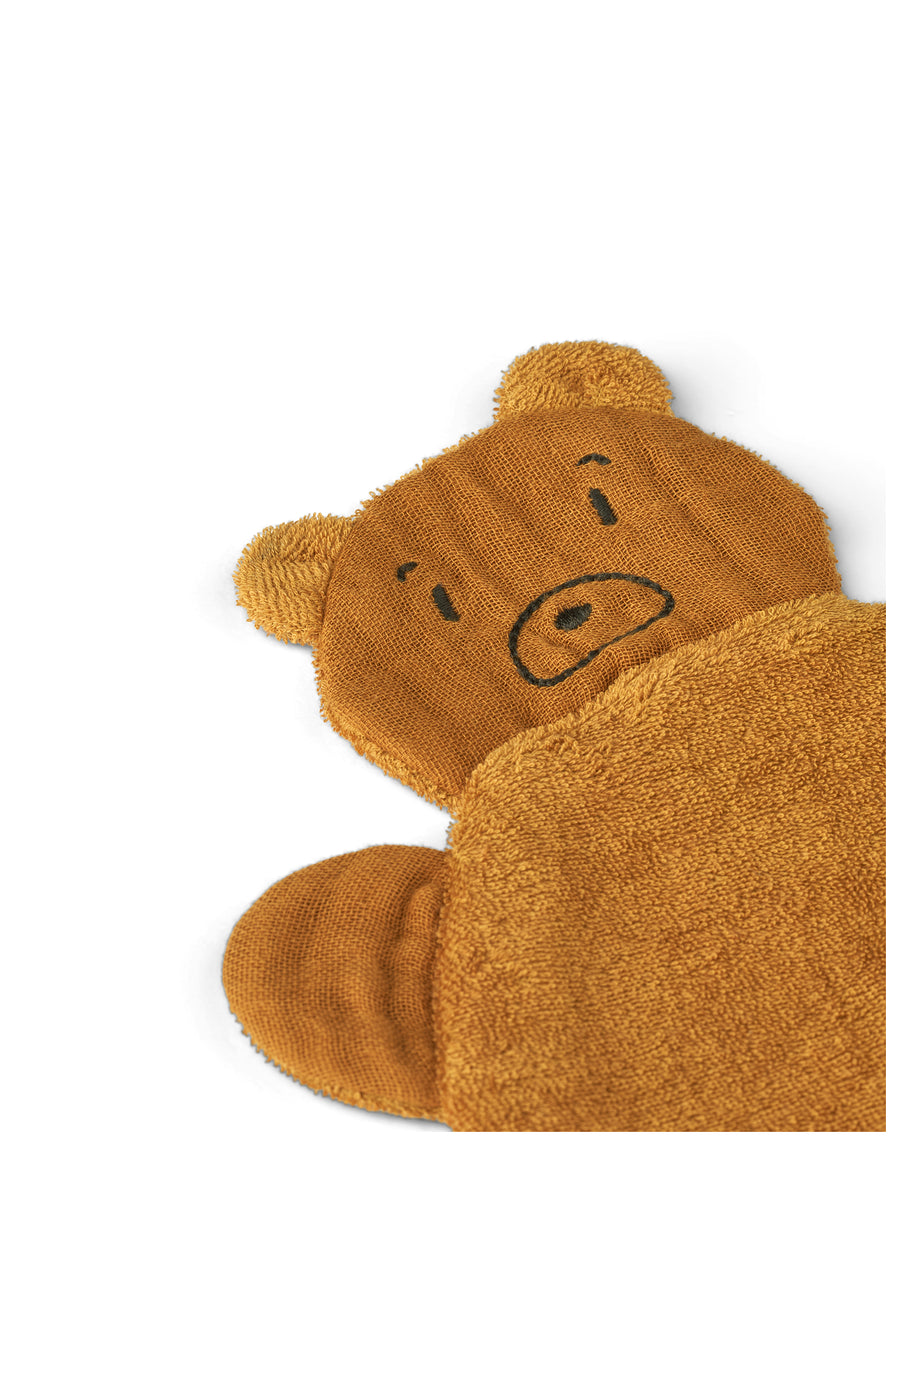 Comforter Janai (Set of 2) | Mr bear/Golden caramel - Liewood